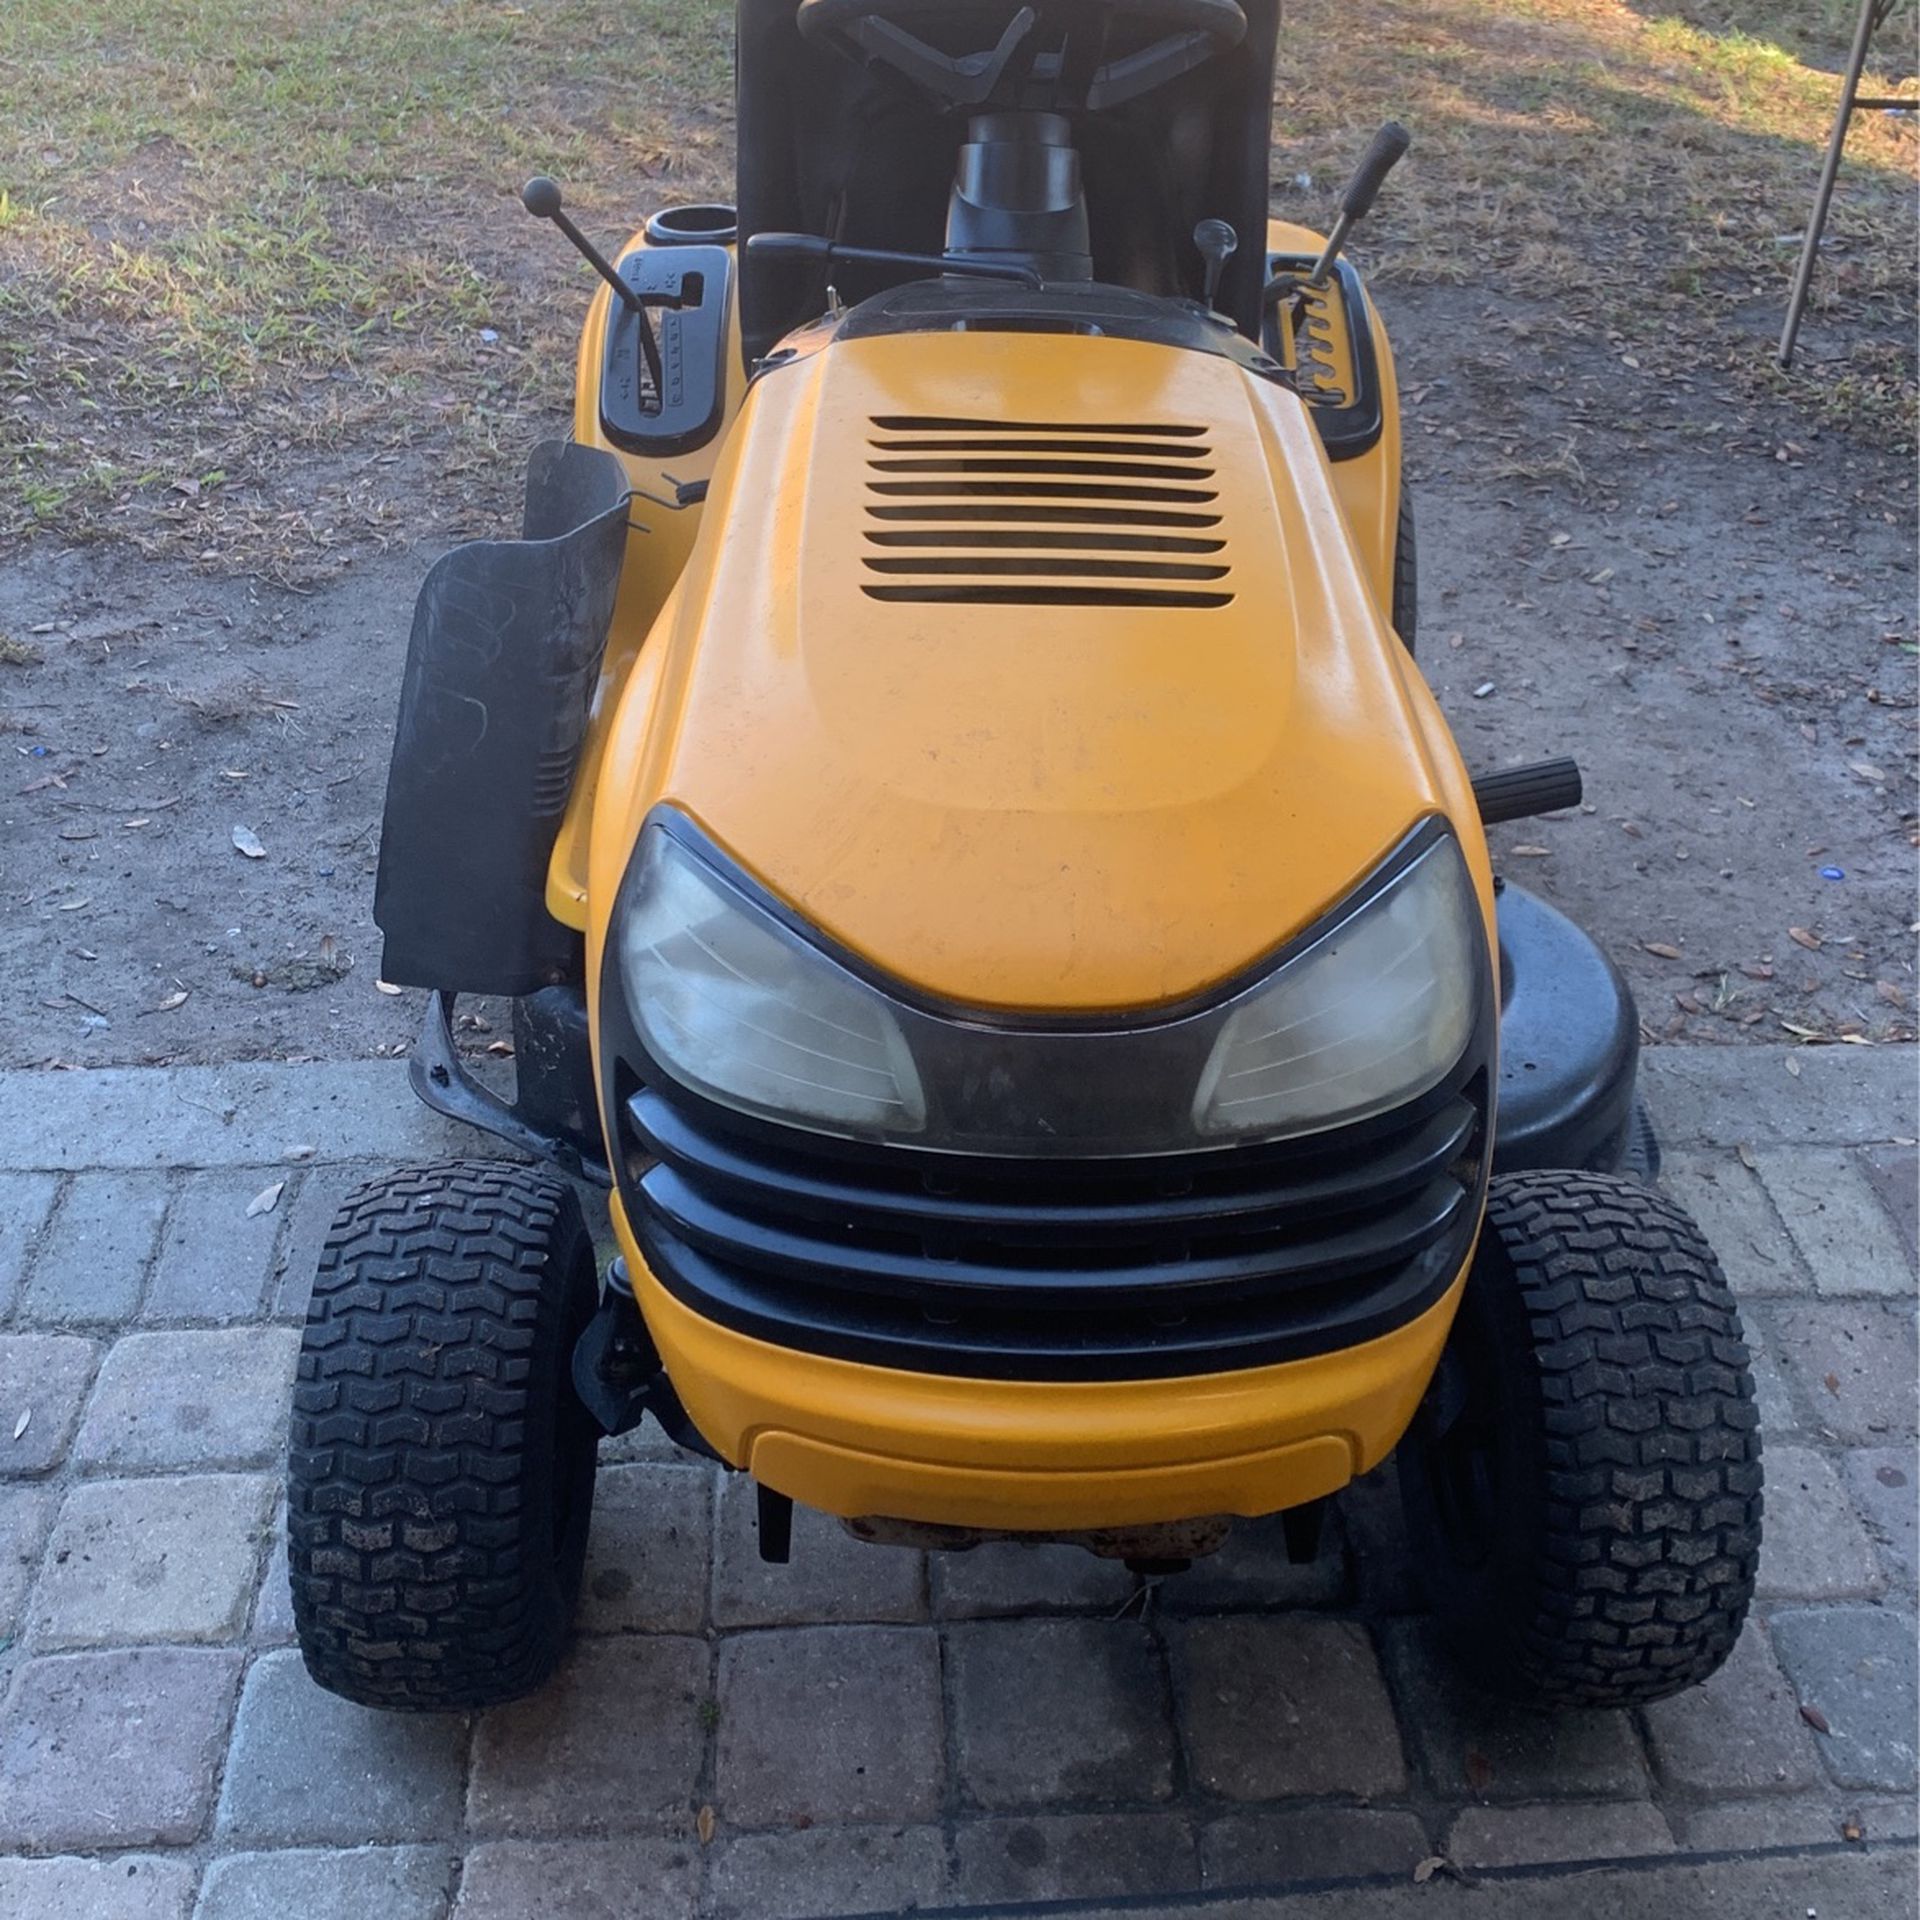 Polan pro riding lawn tractor